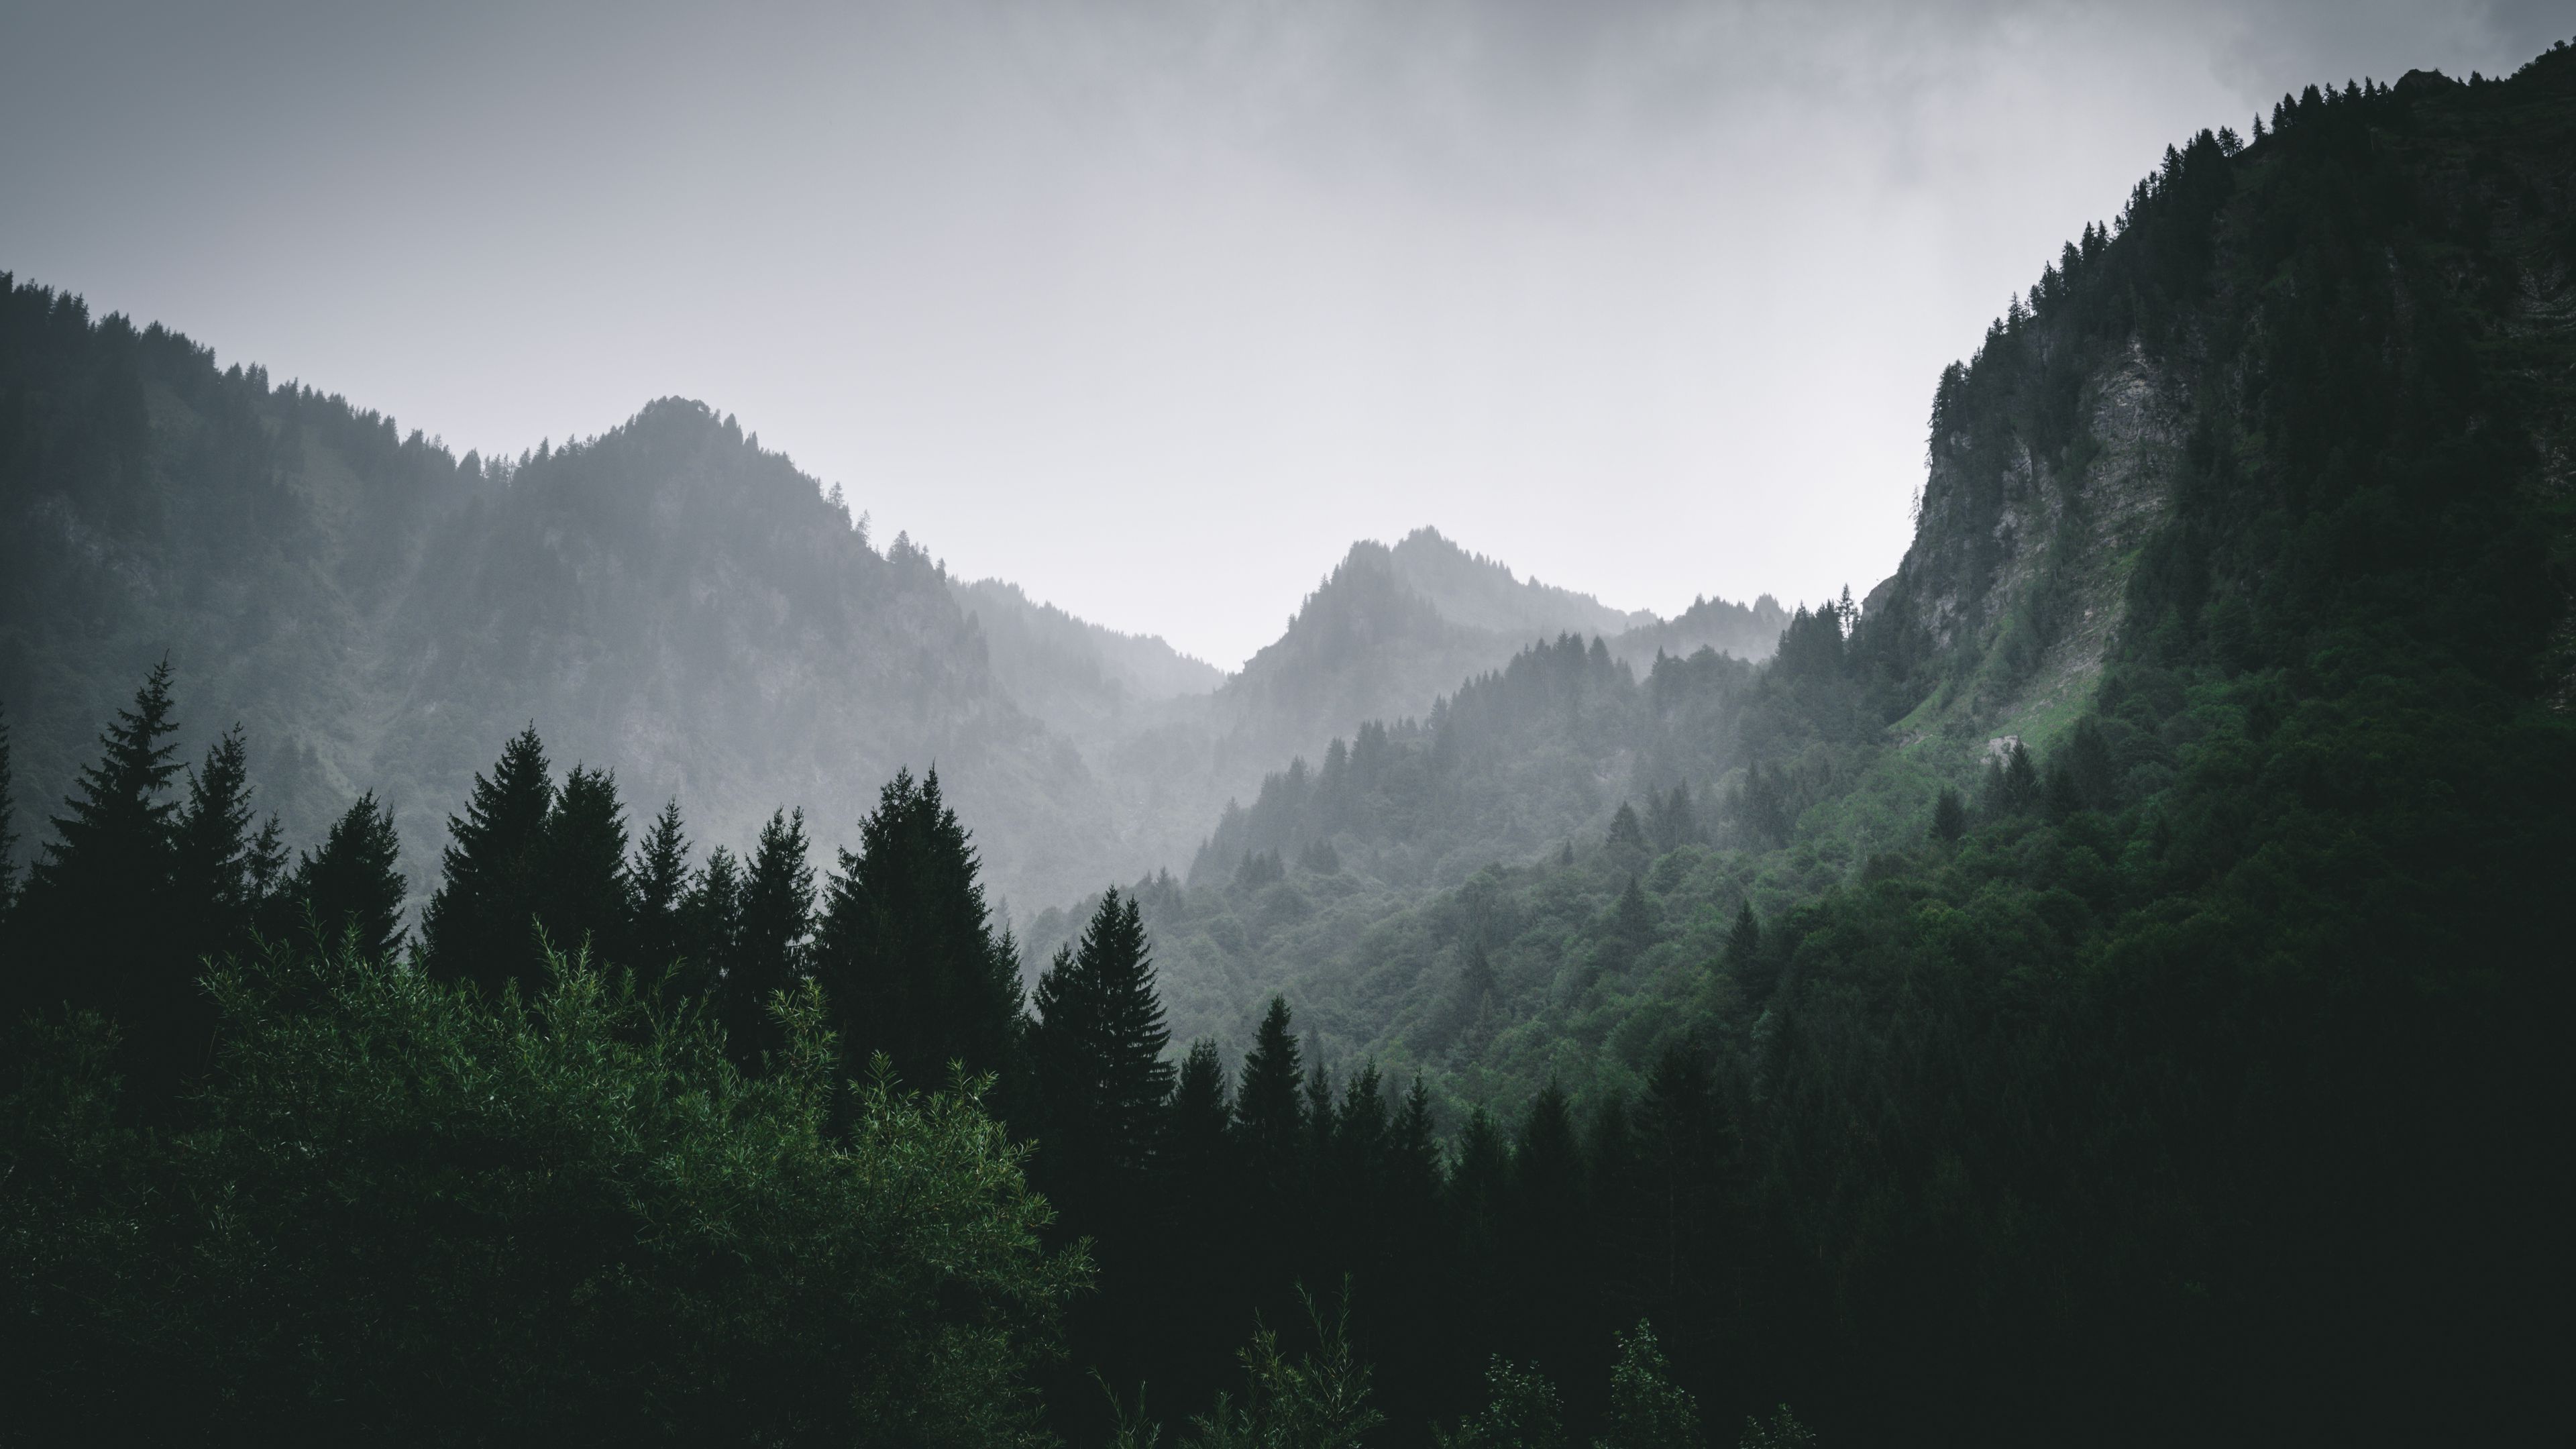 Download wallpaper 3840x2160 mountains, forest, fog, landscape 4k uhd 16:9 HD background